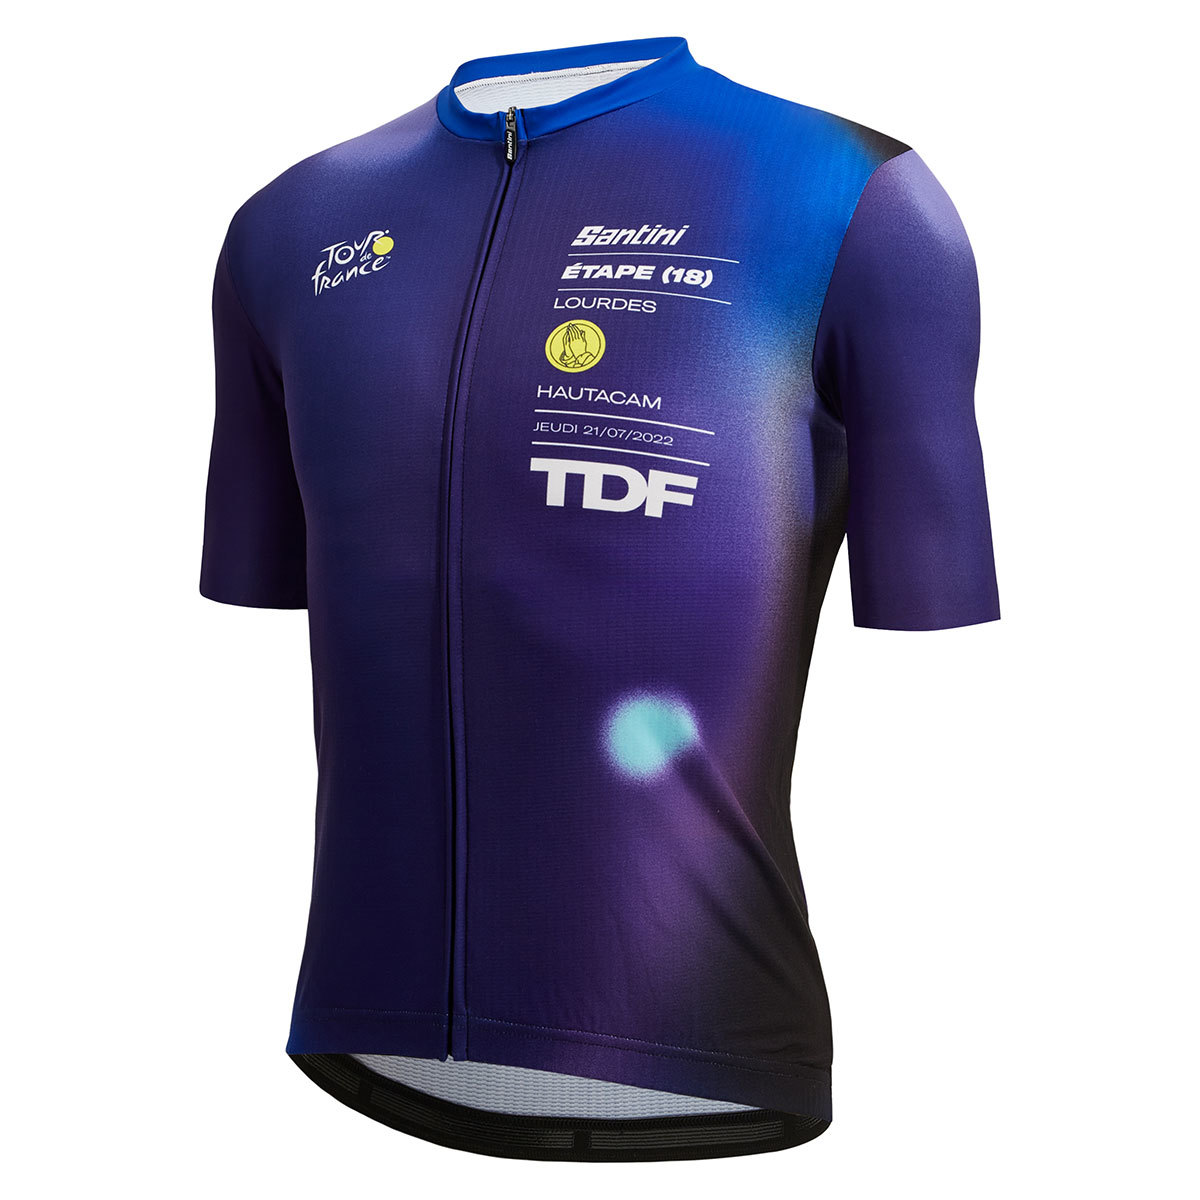 Santini Tour De France Official Lourdes Fietsshirt Korte Mouwen Blauw/Paars 